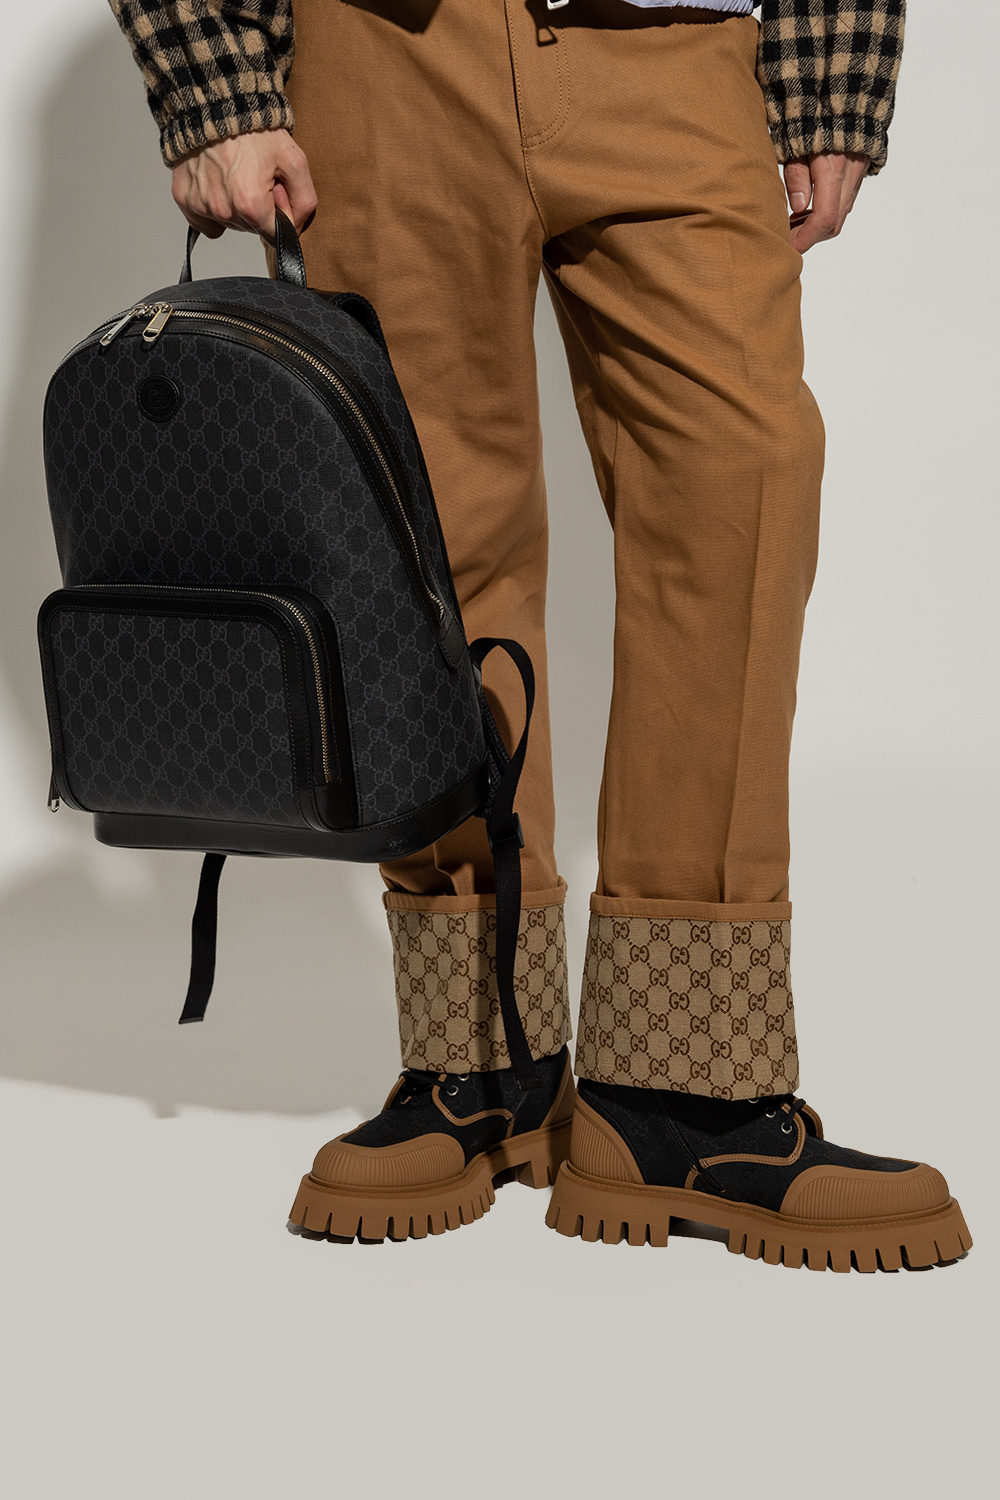 Black 'GG Supreme' canvas backpack Gucci - Vitkac France